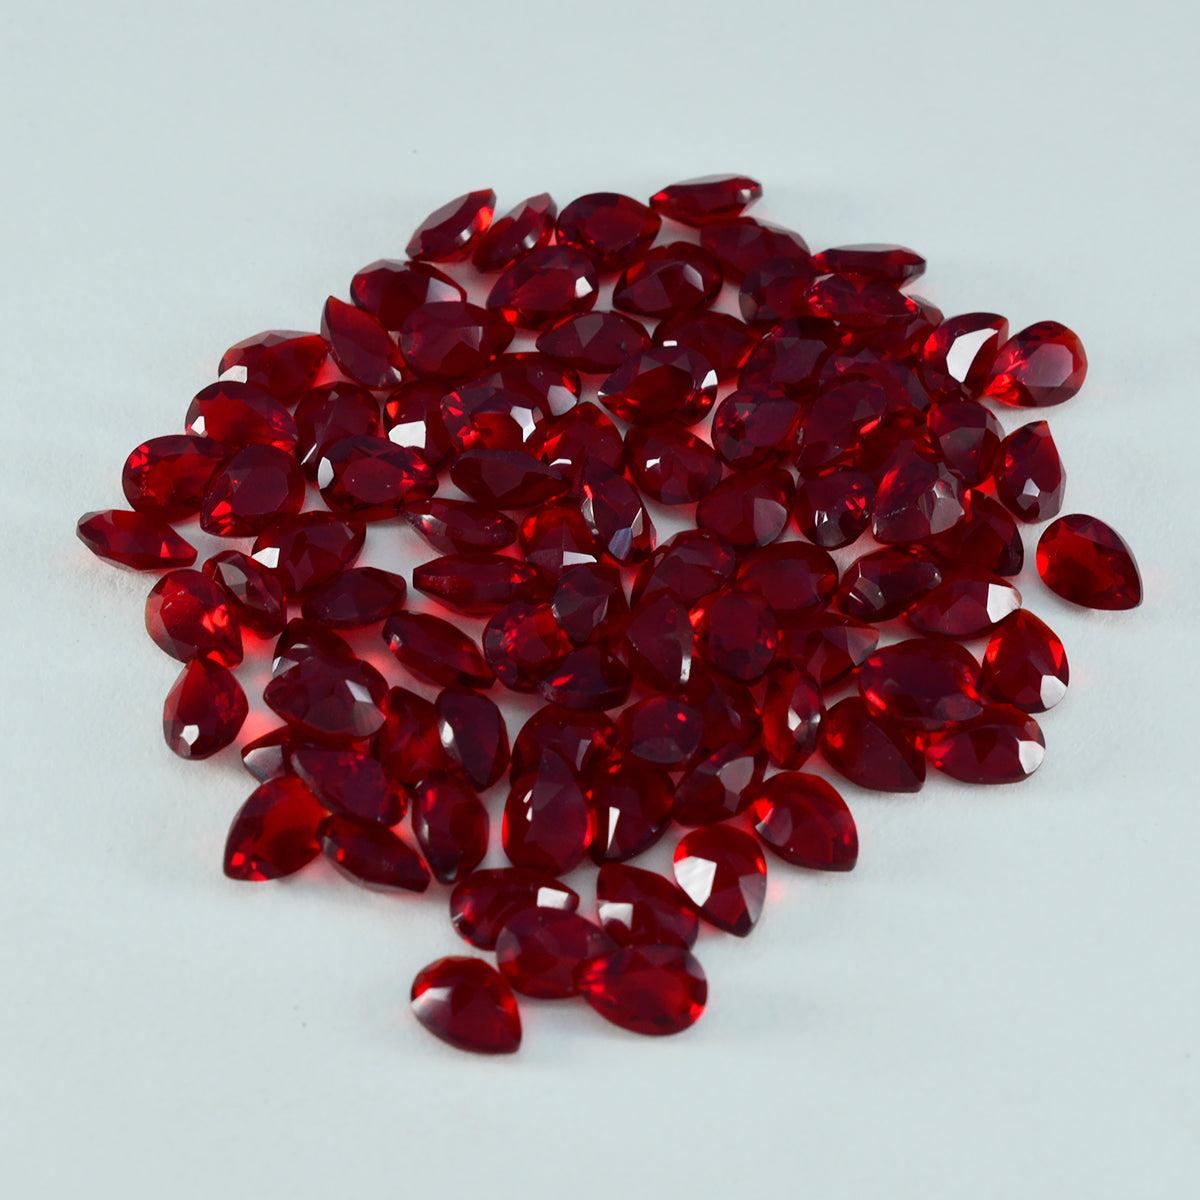 riyogems 1st röd rubin cz fasetterad 3x5 mm päronform söt kvalitetspärla